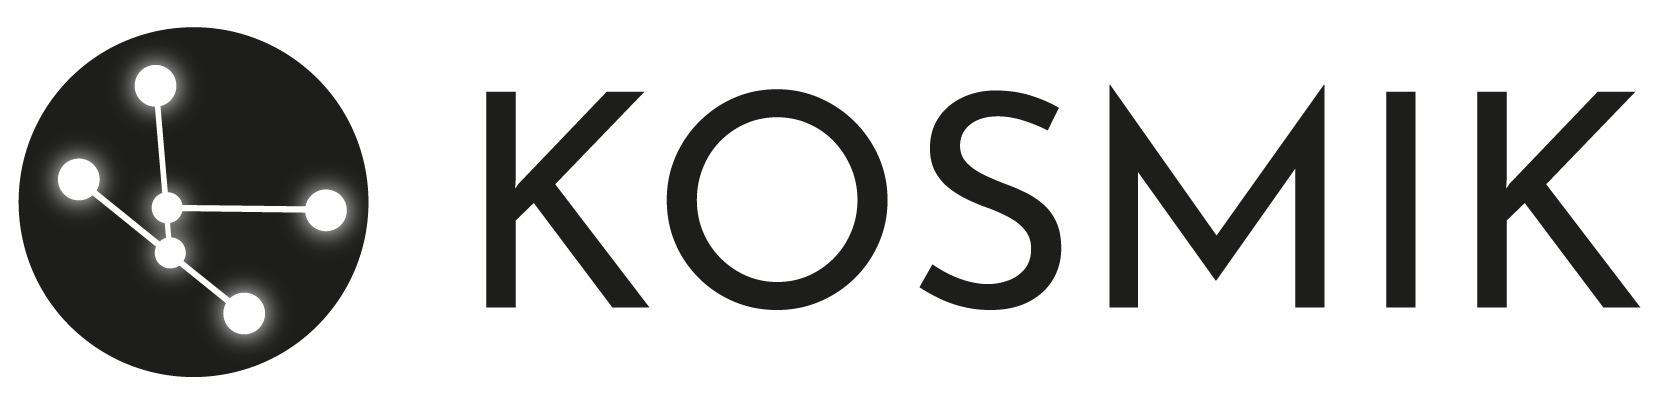 Logo KOSMIK 0422